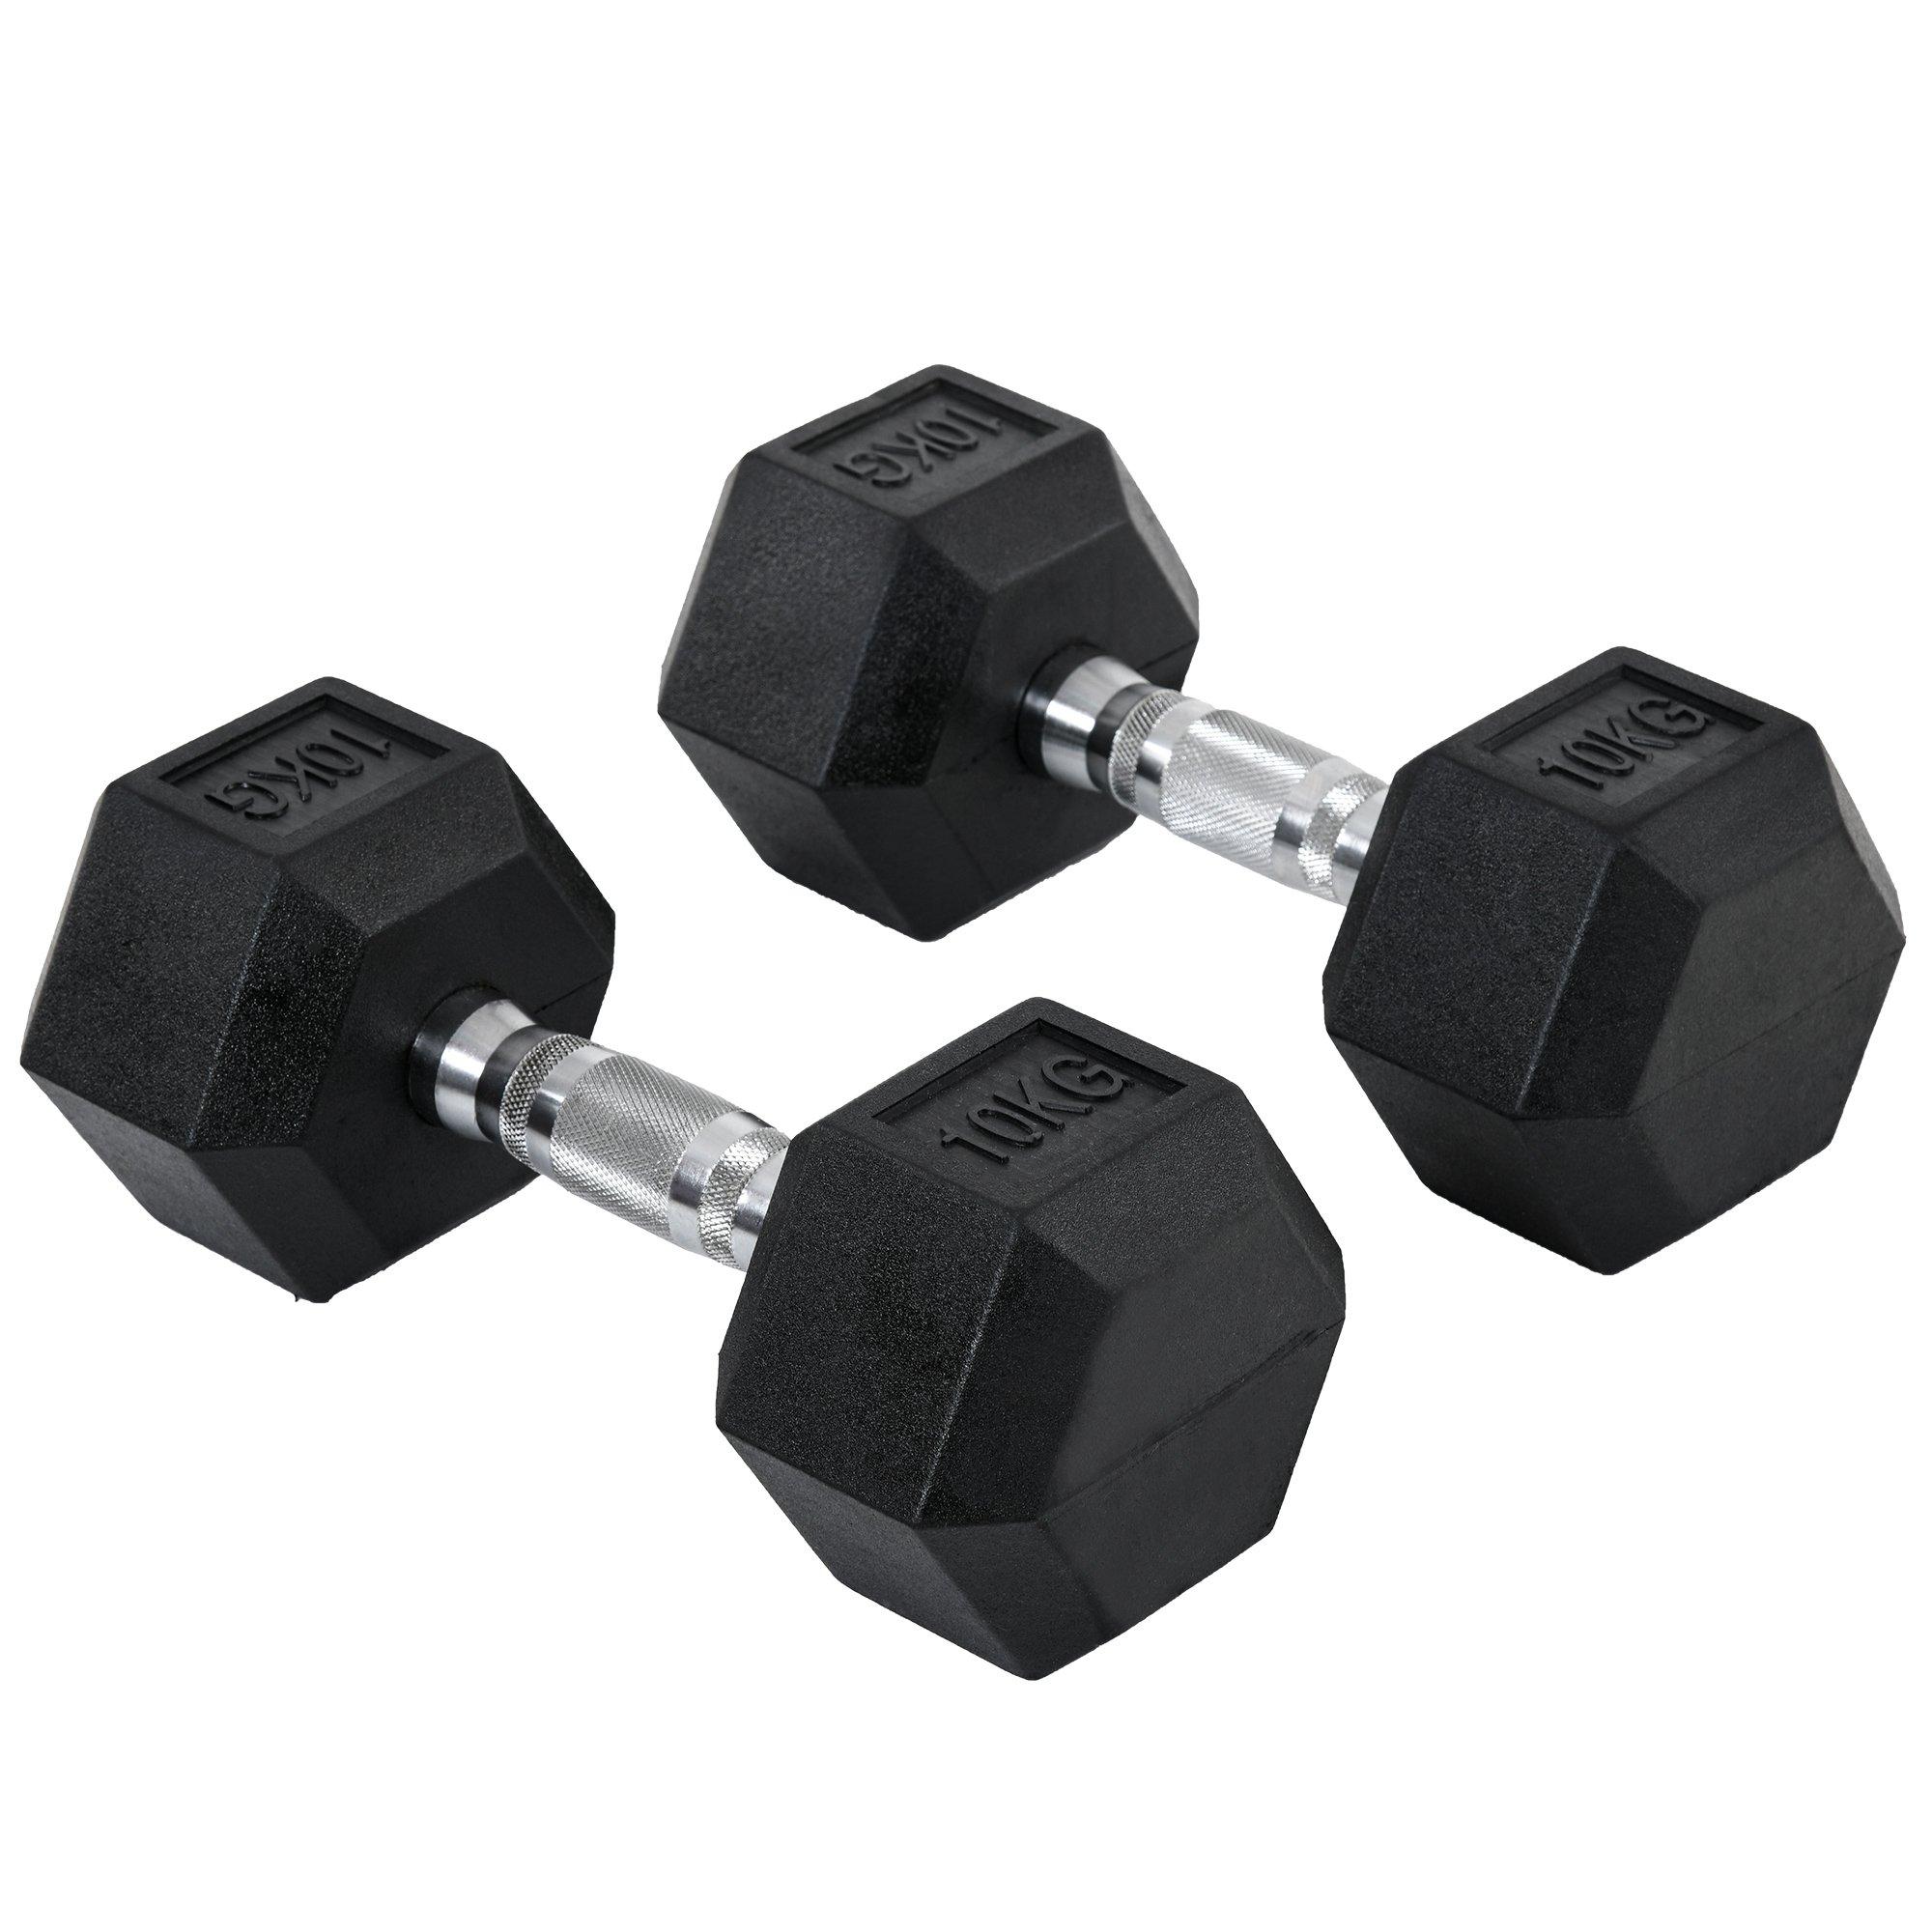 Hexagonal Dumbbells Kit Weight Lifting Exercise for Home Fitness